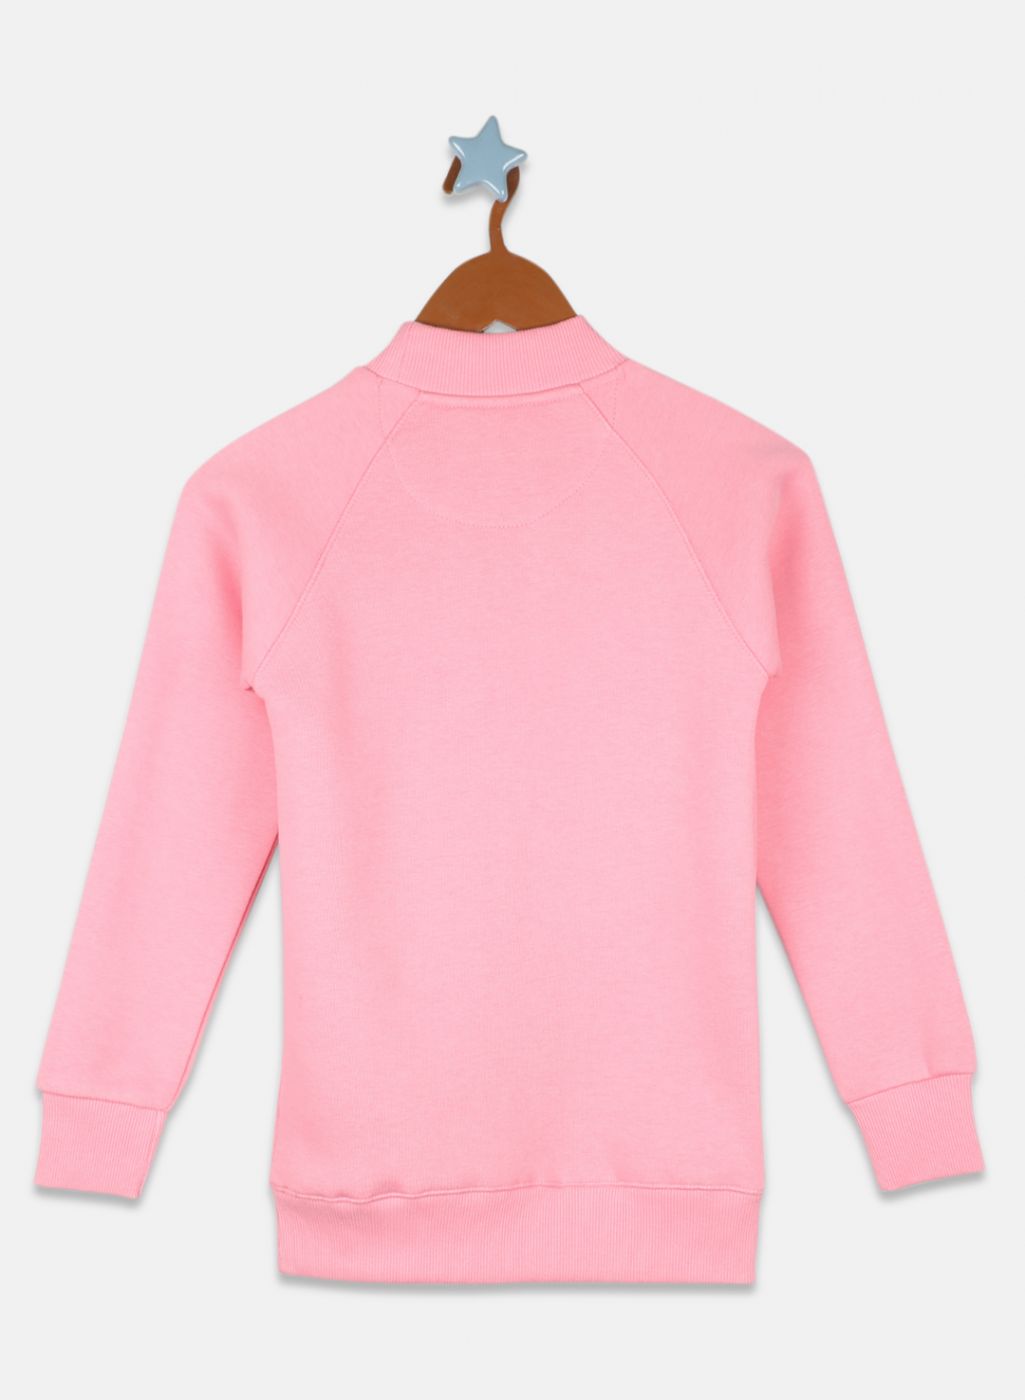 Girls Coral Pink Printed Sweatshirt